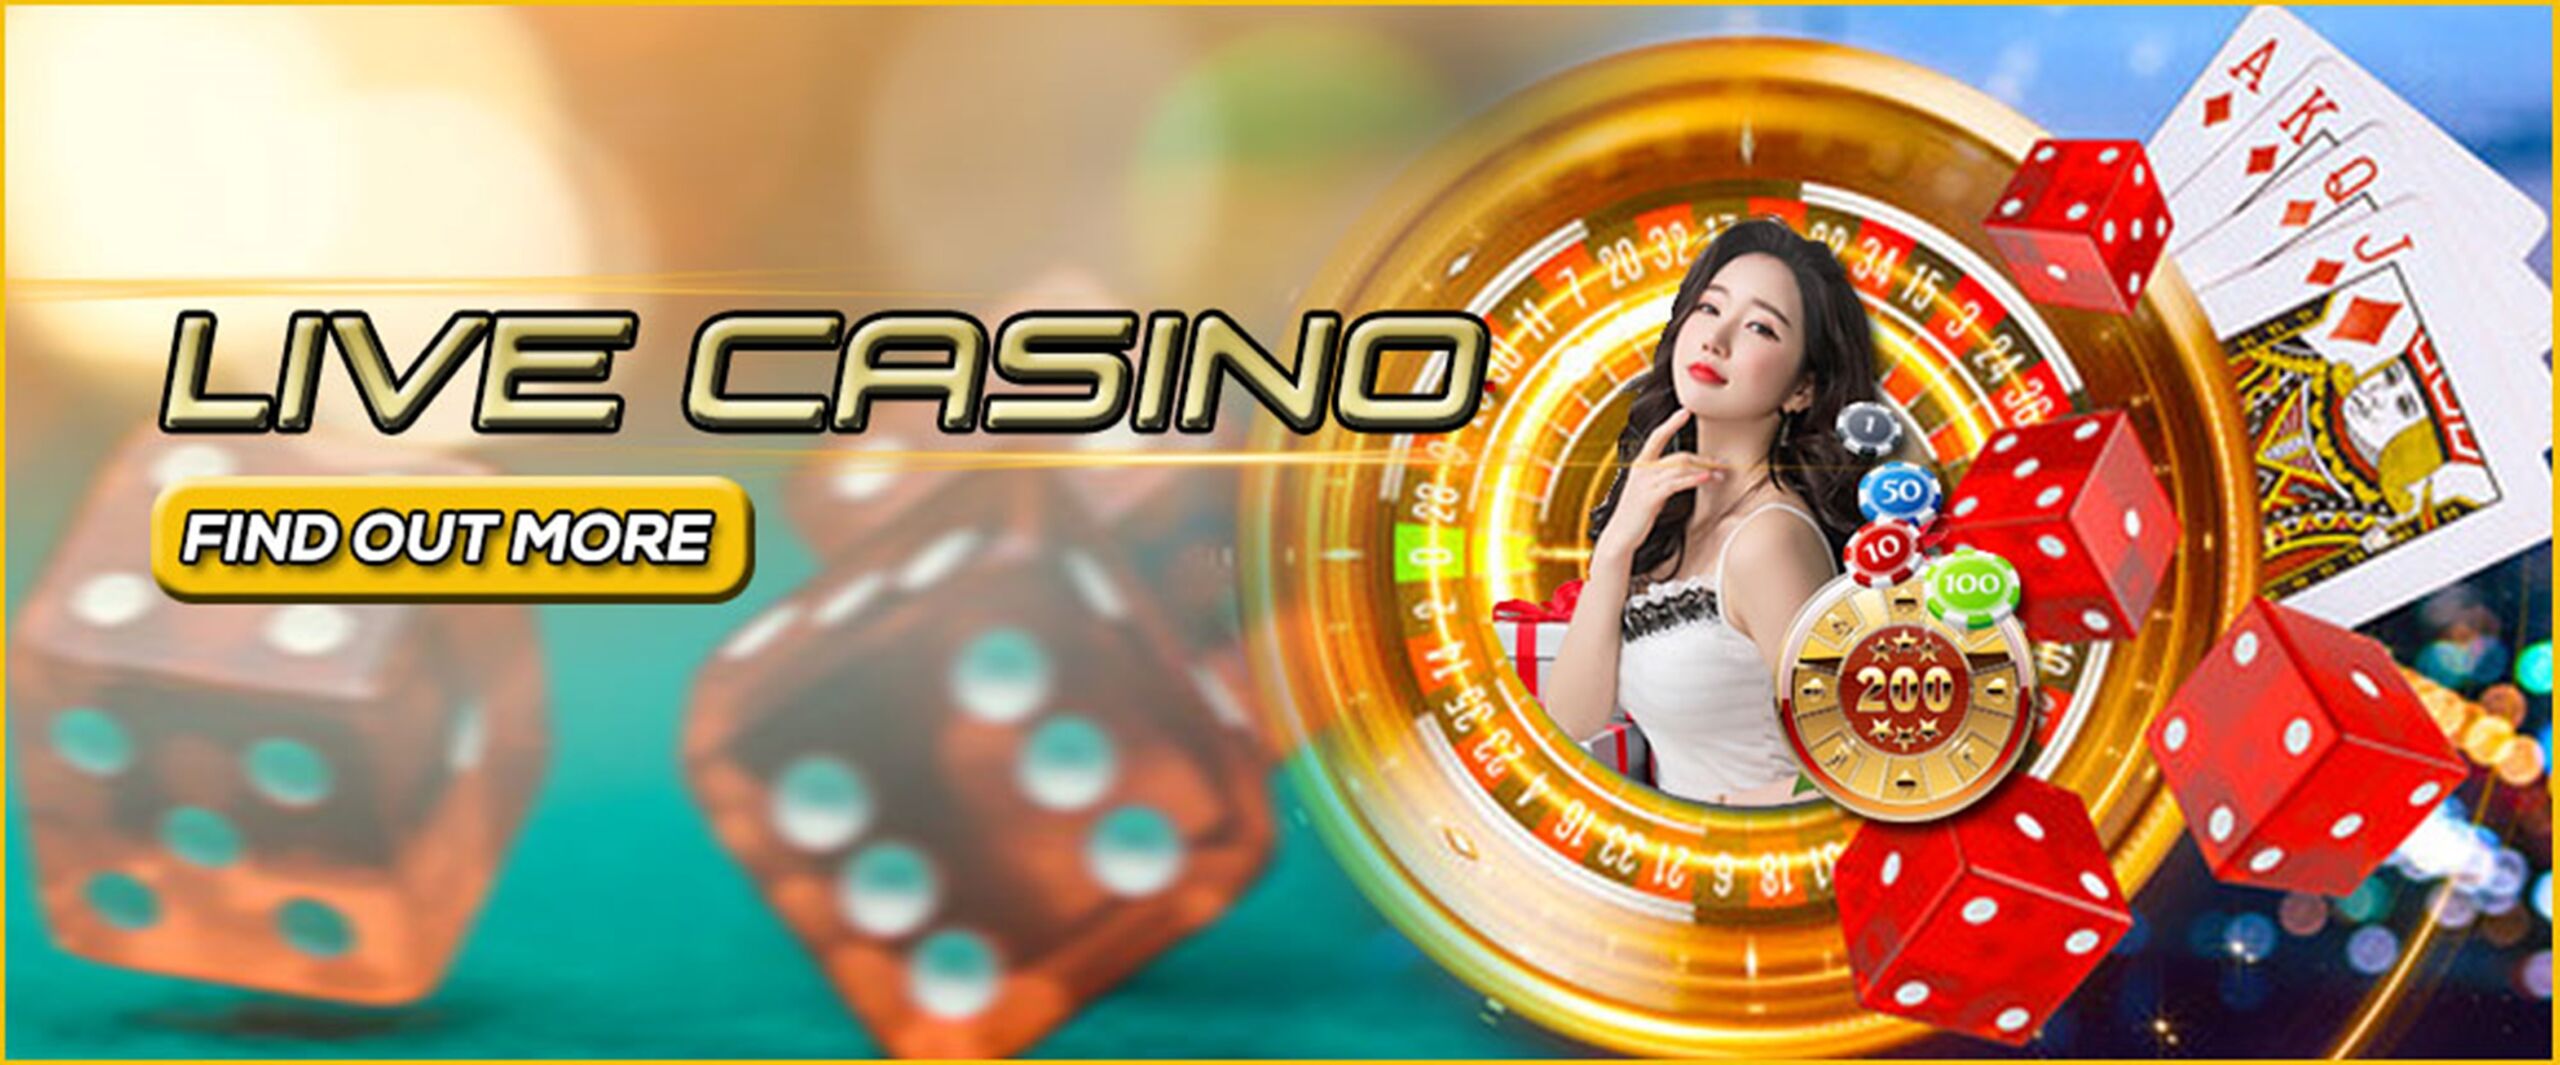 Live Casino Games in Singapore